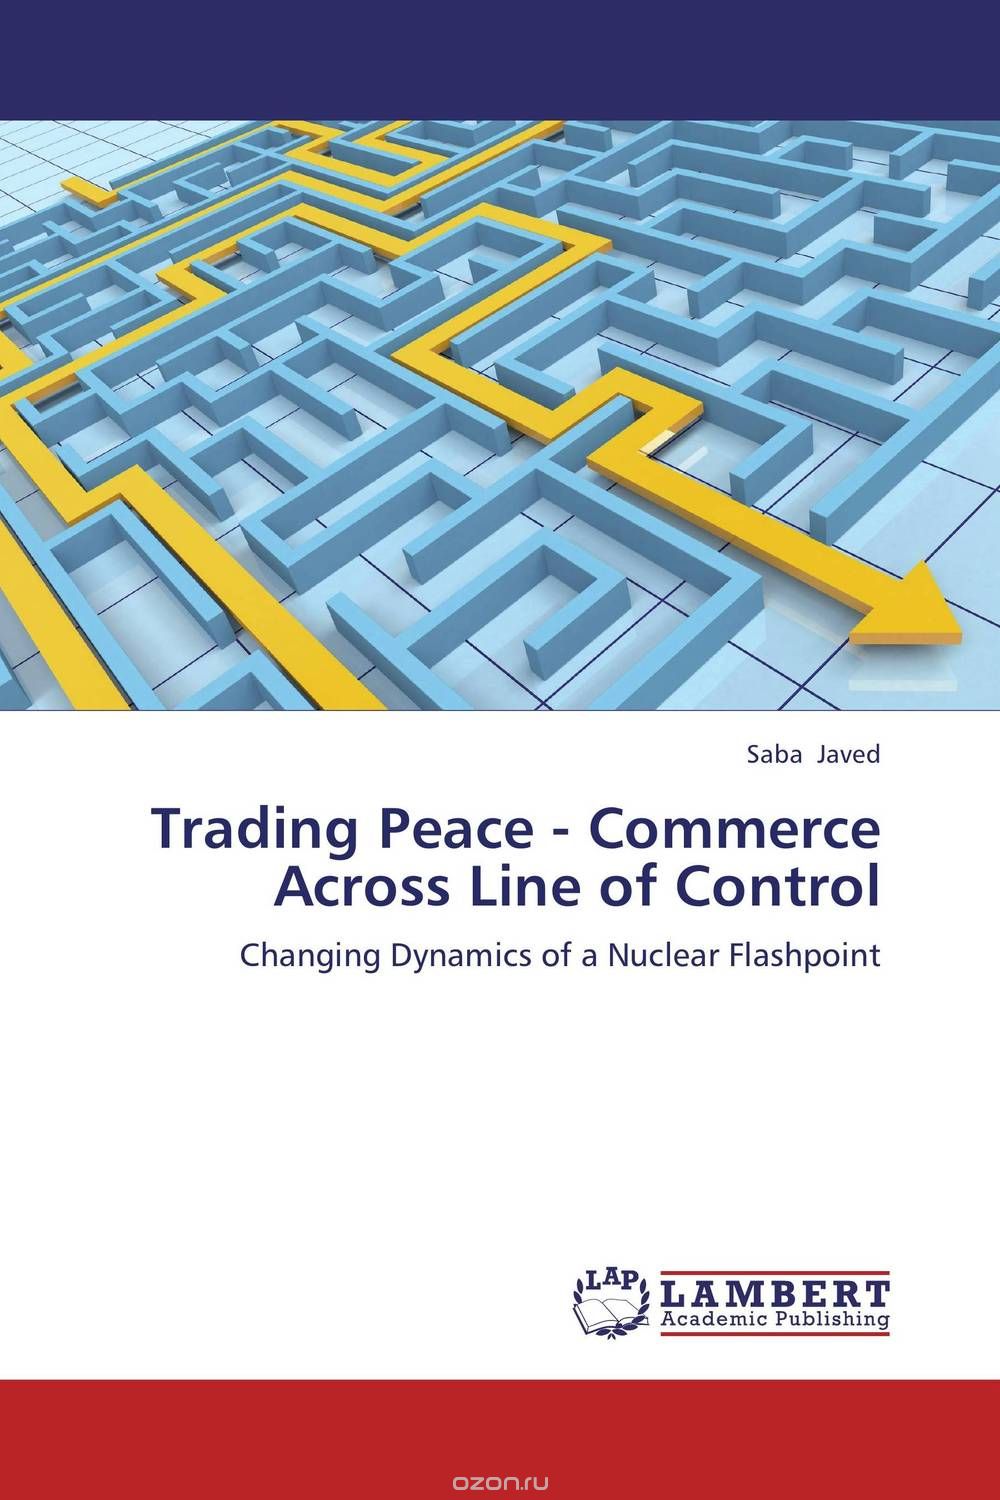 Скачать книгу "Trading Peace - Commerce Across Line of Control"